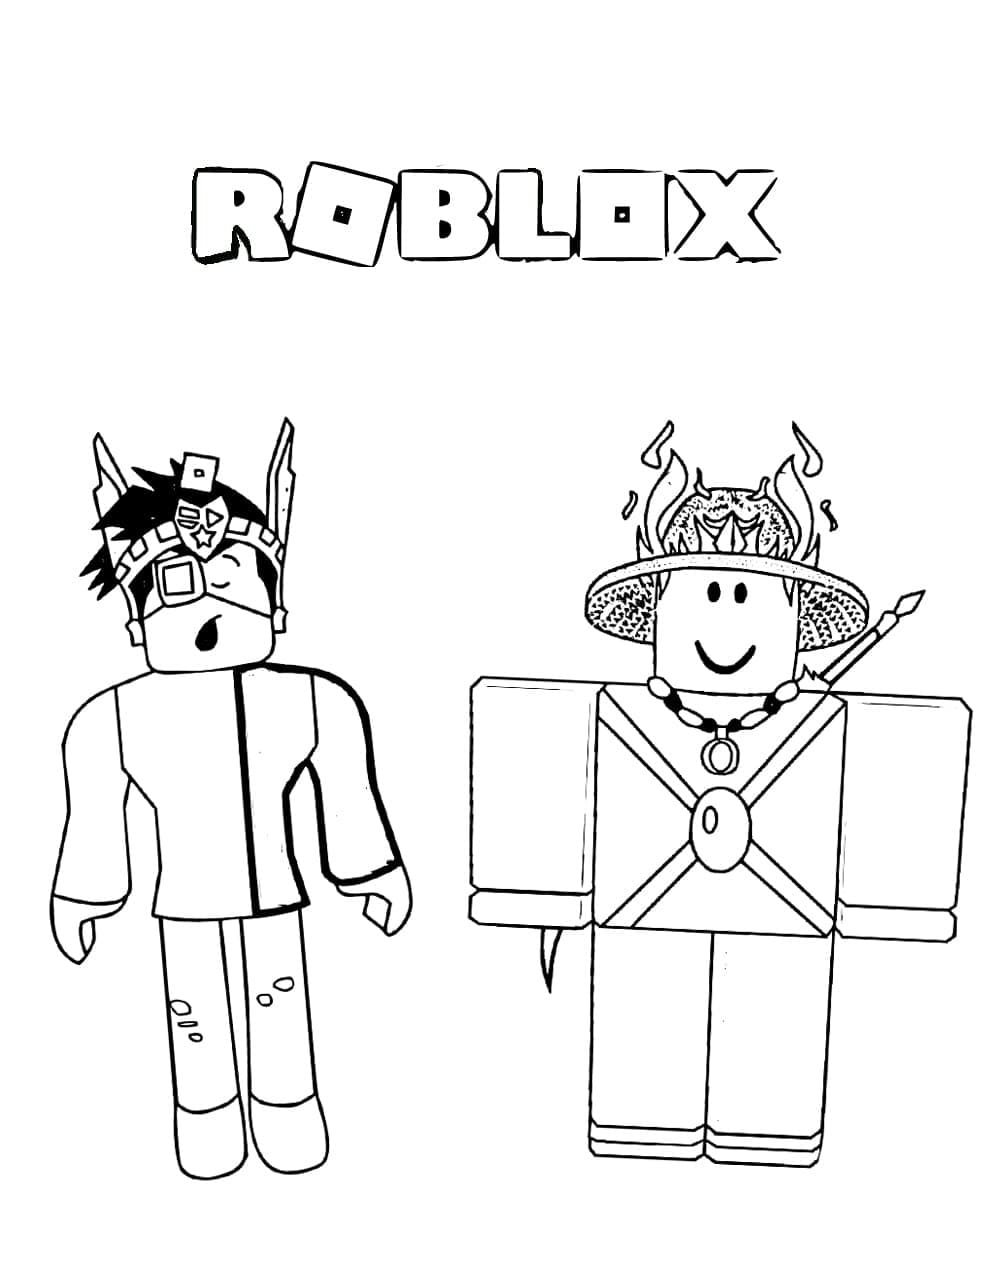 Printable Roblox coloring page